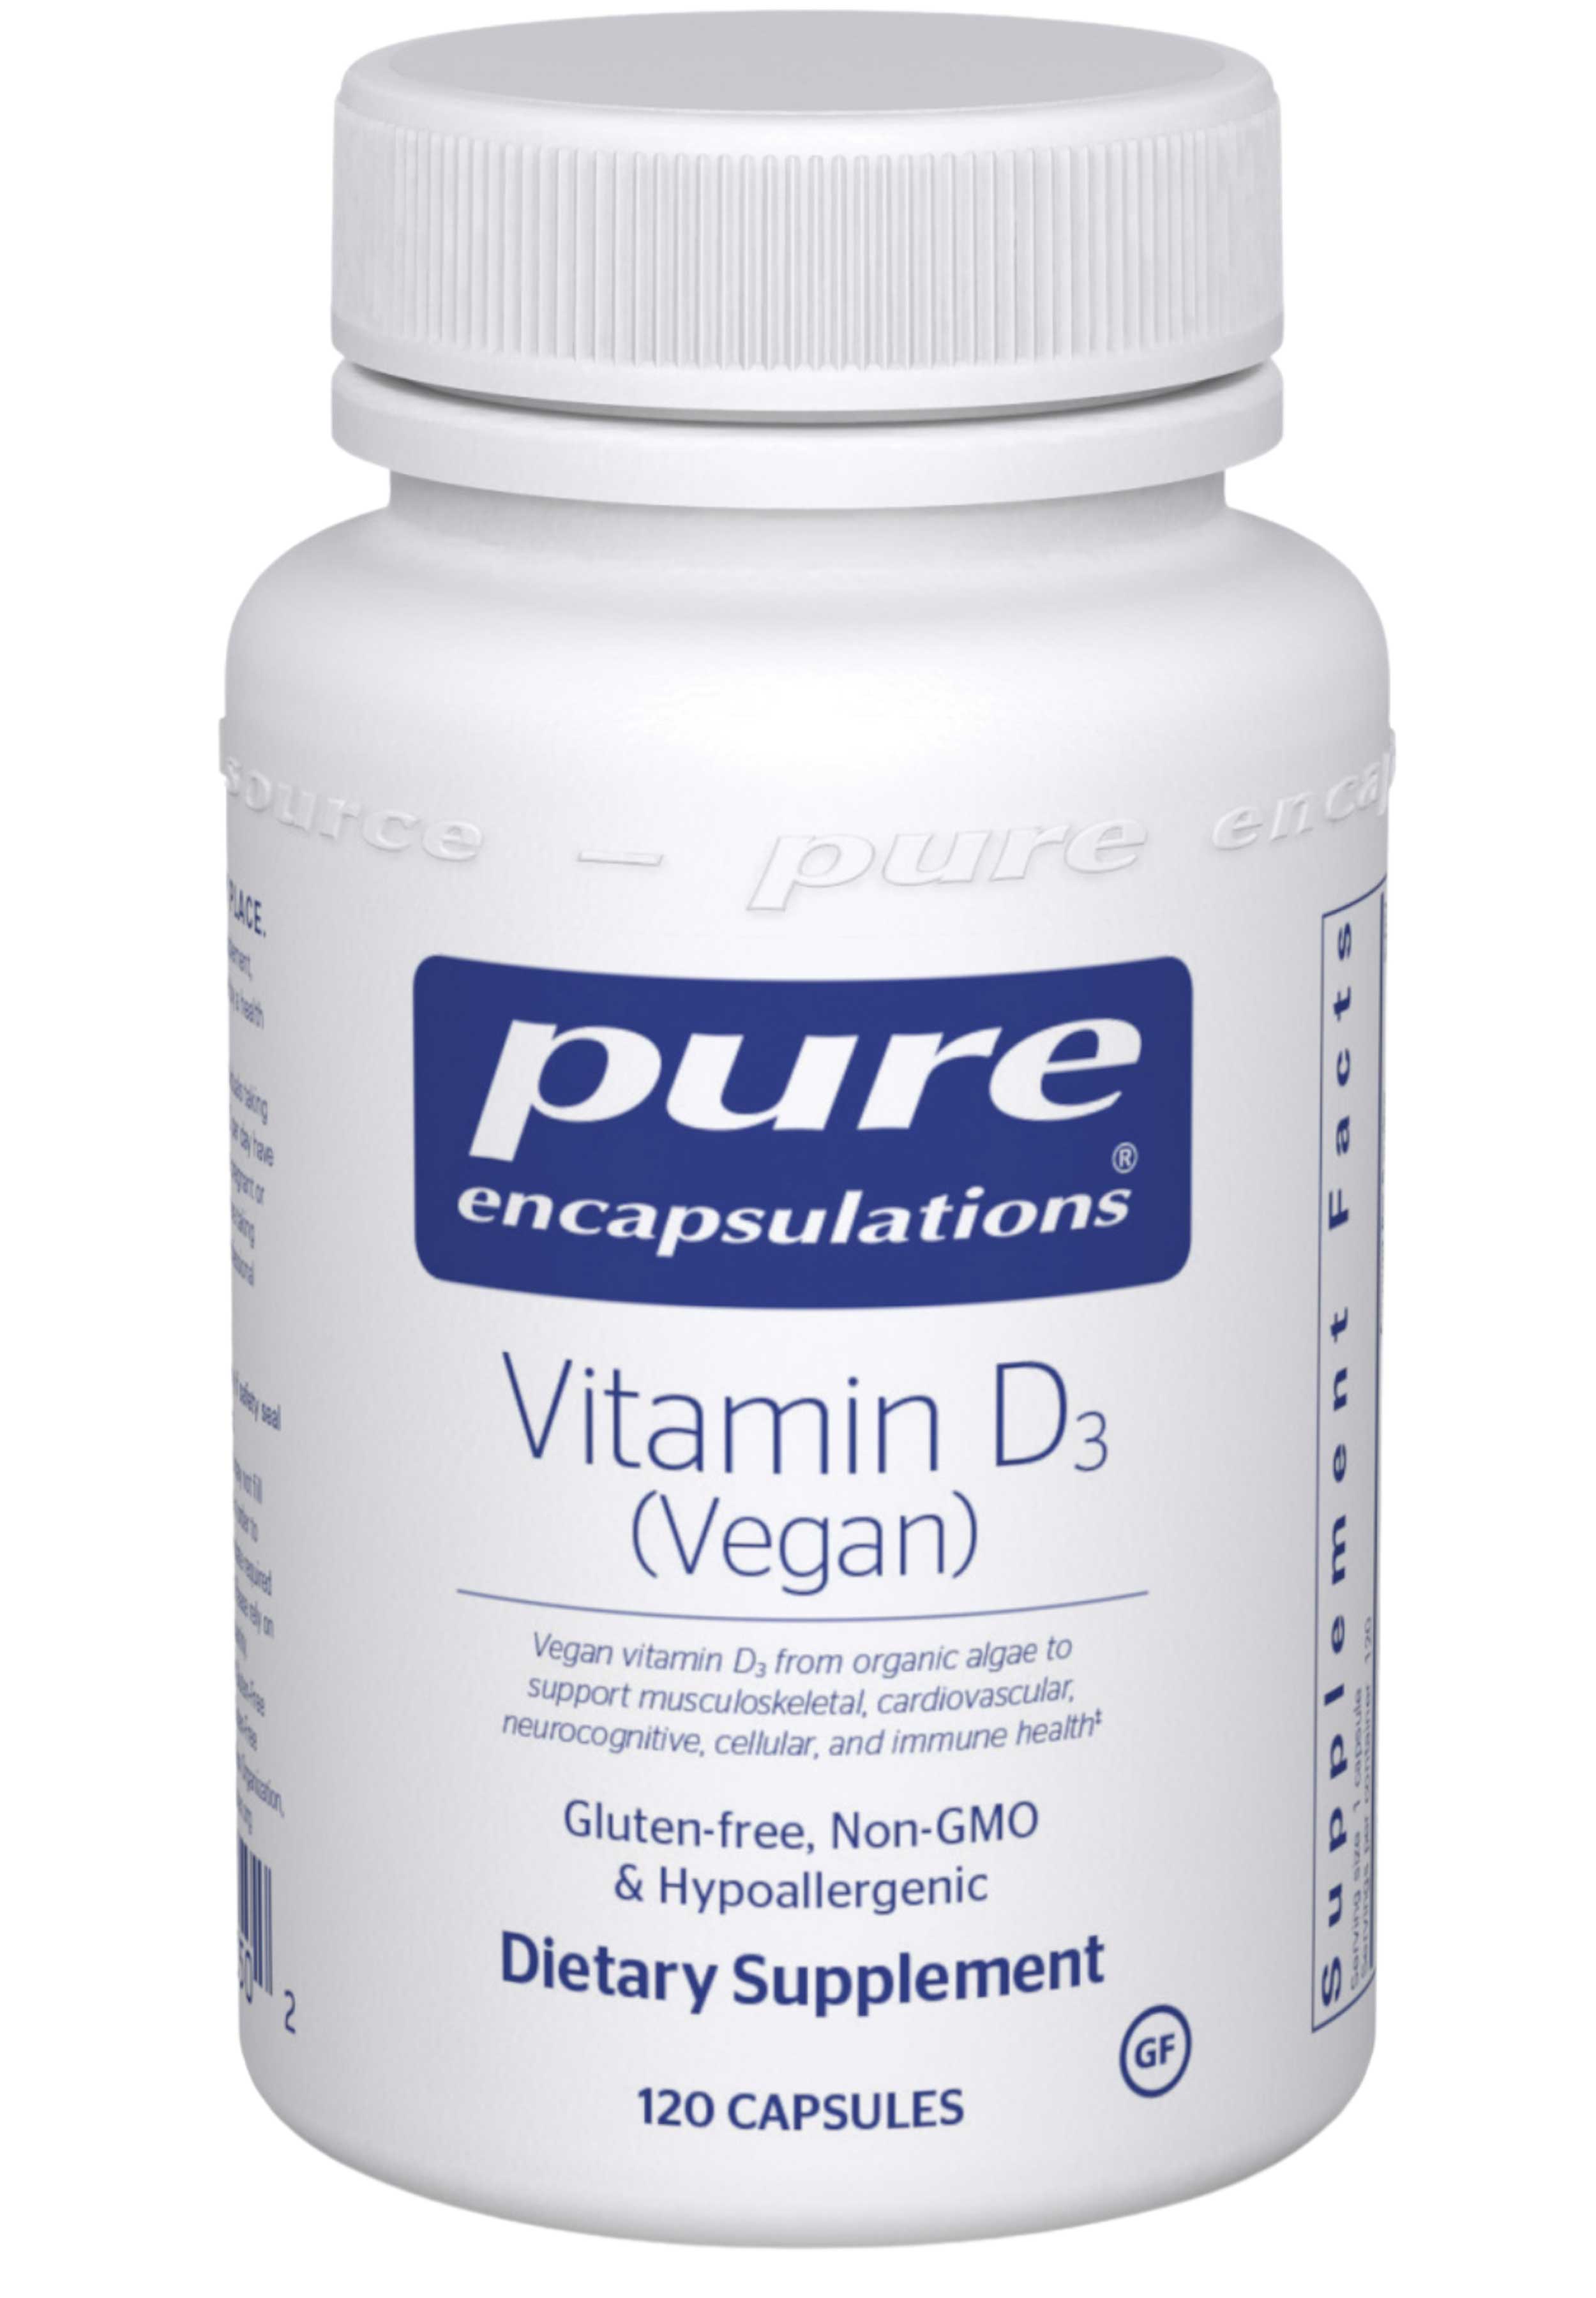 Pure Encapsulations Vitamin D3 (Vegan)